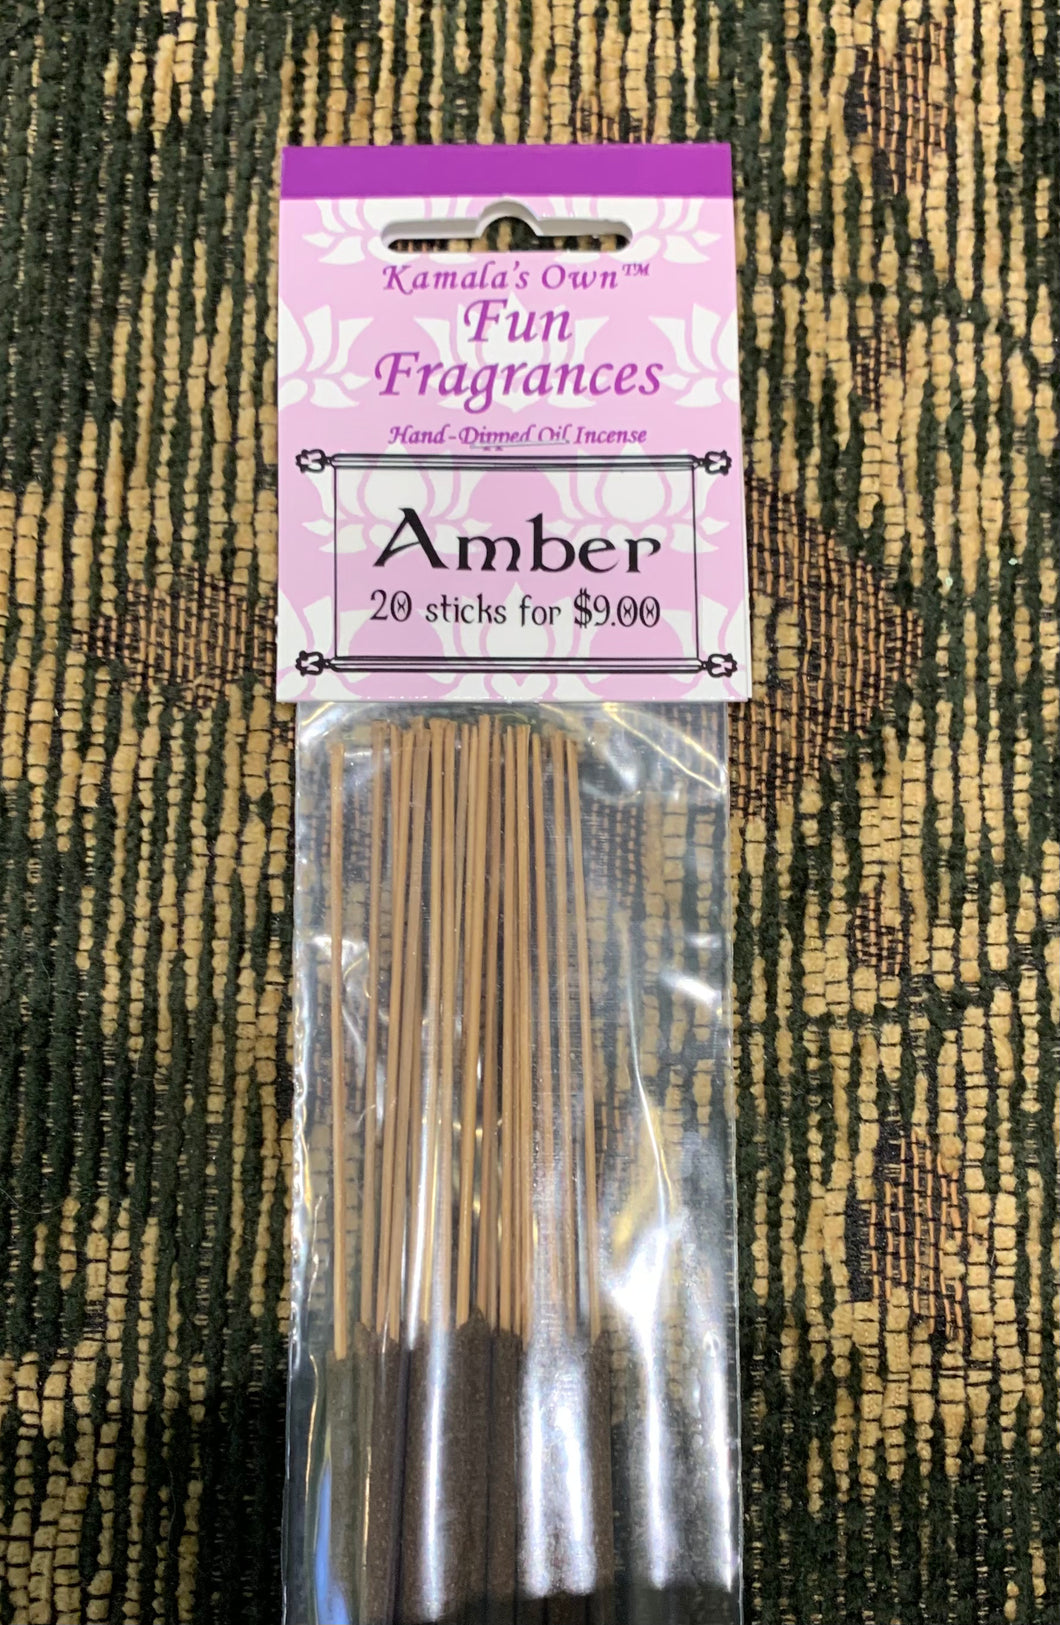 Amber incense